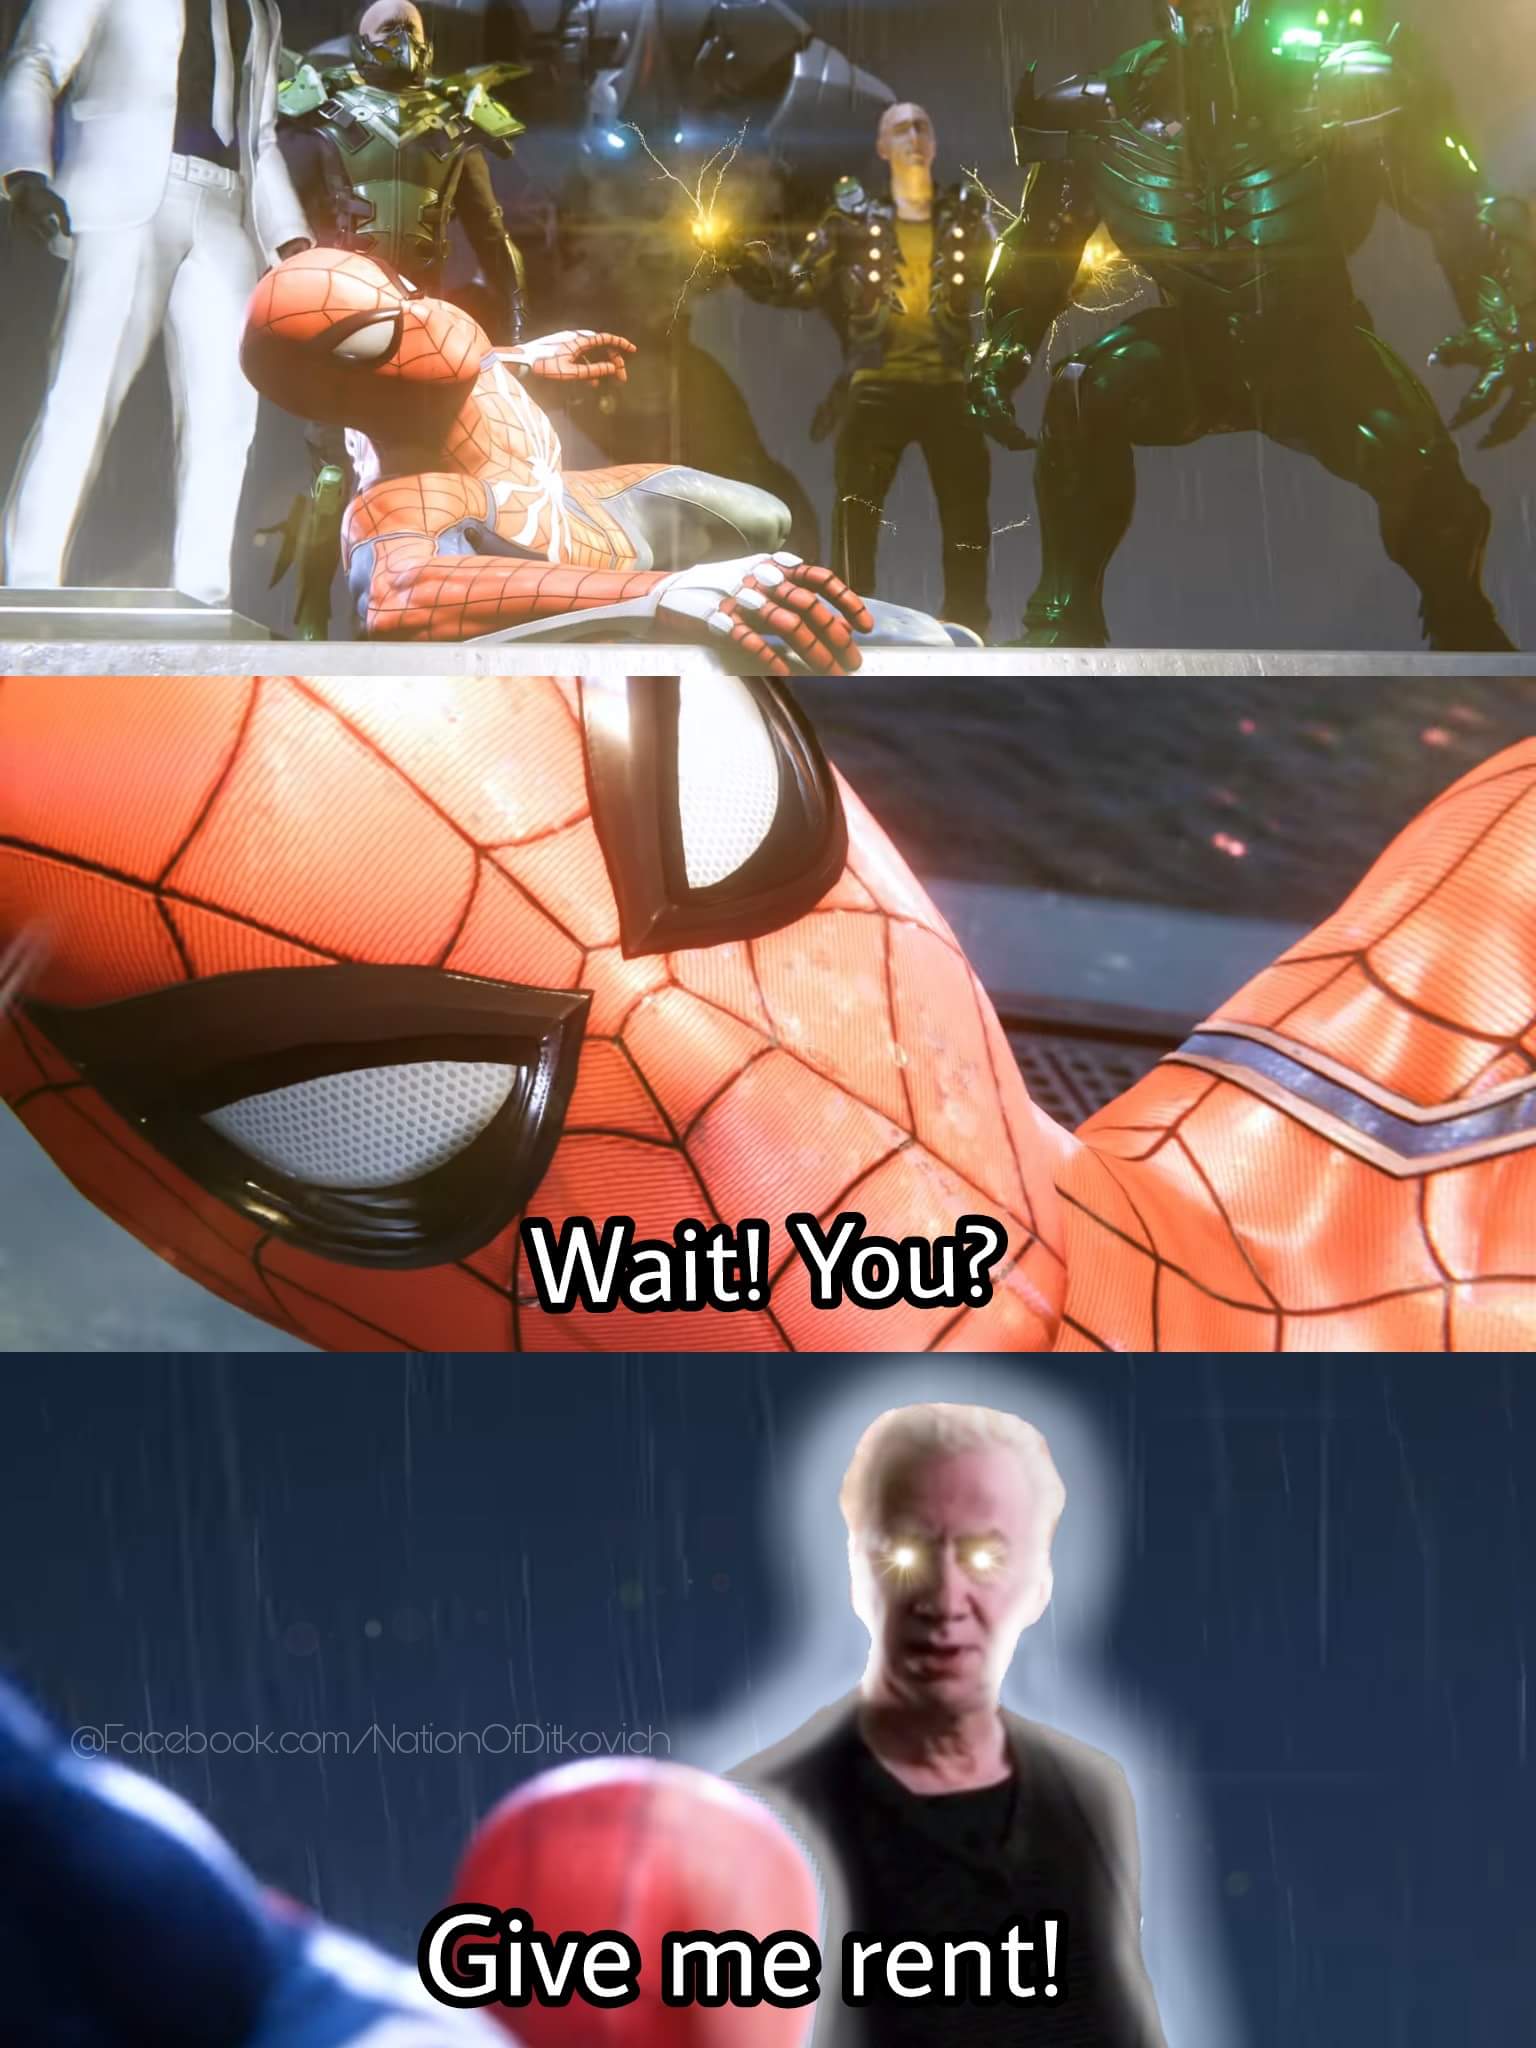 Spider memes